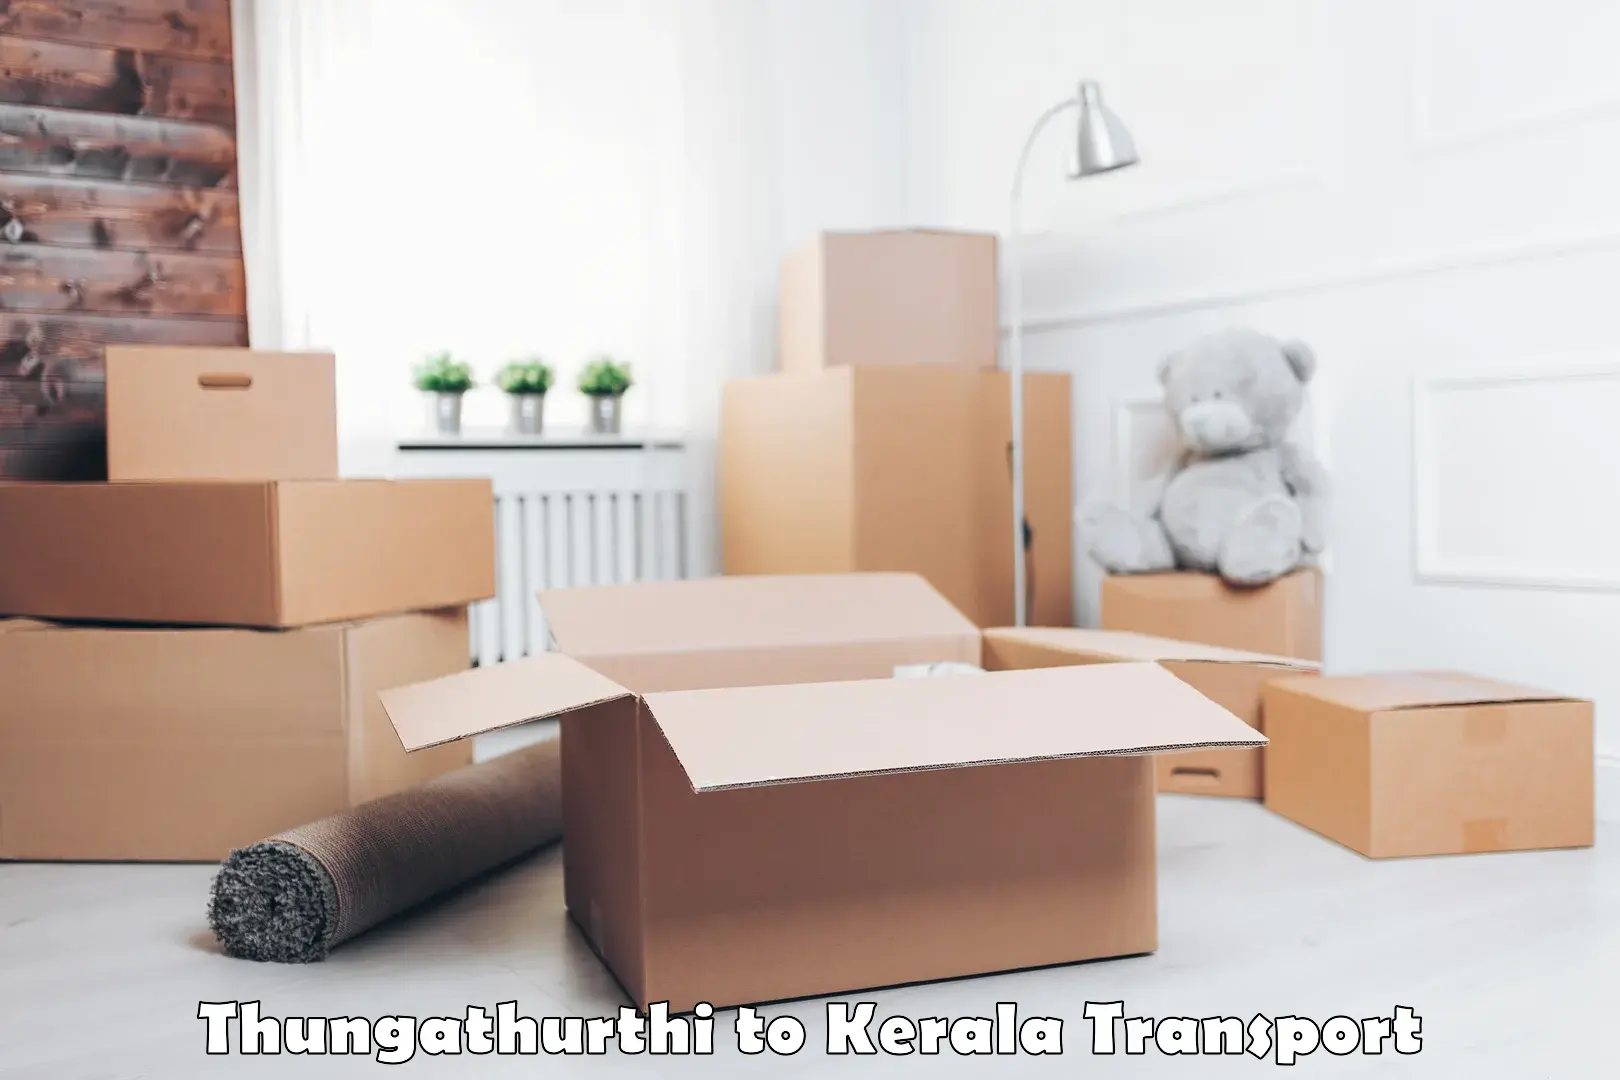 Lorry transport service Thungathurthi to Kerala